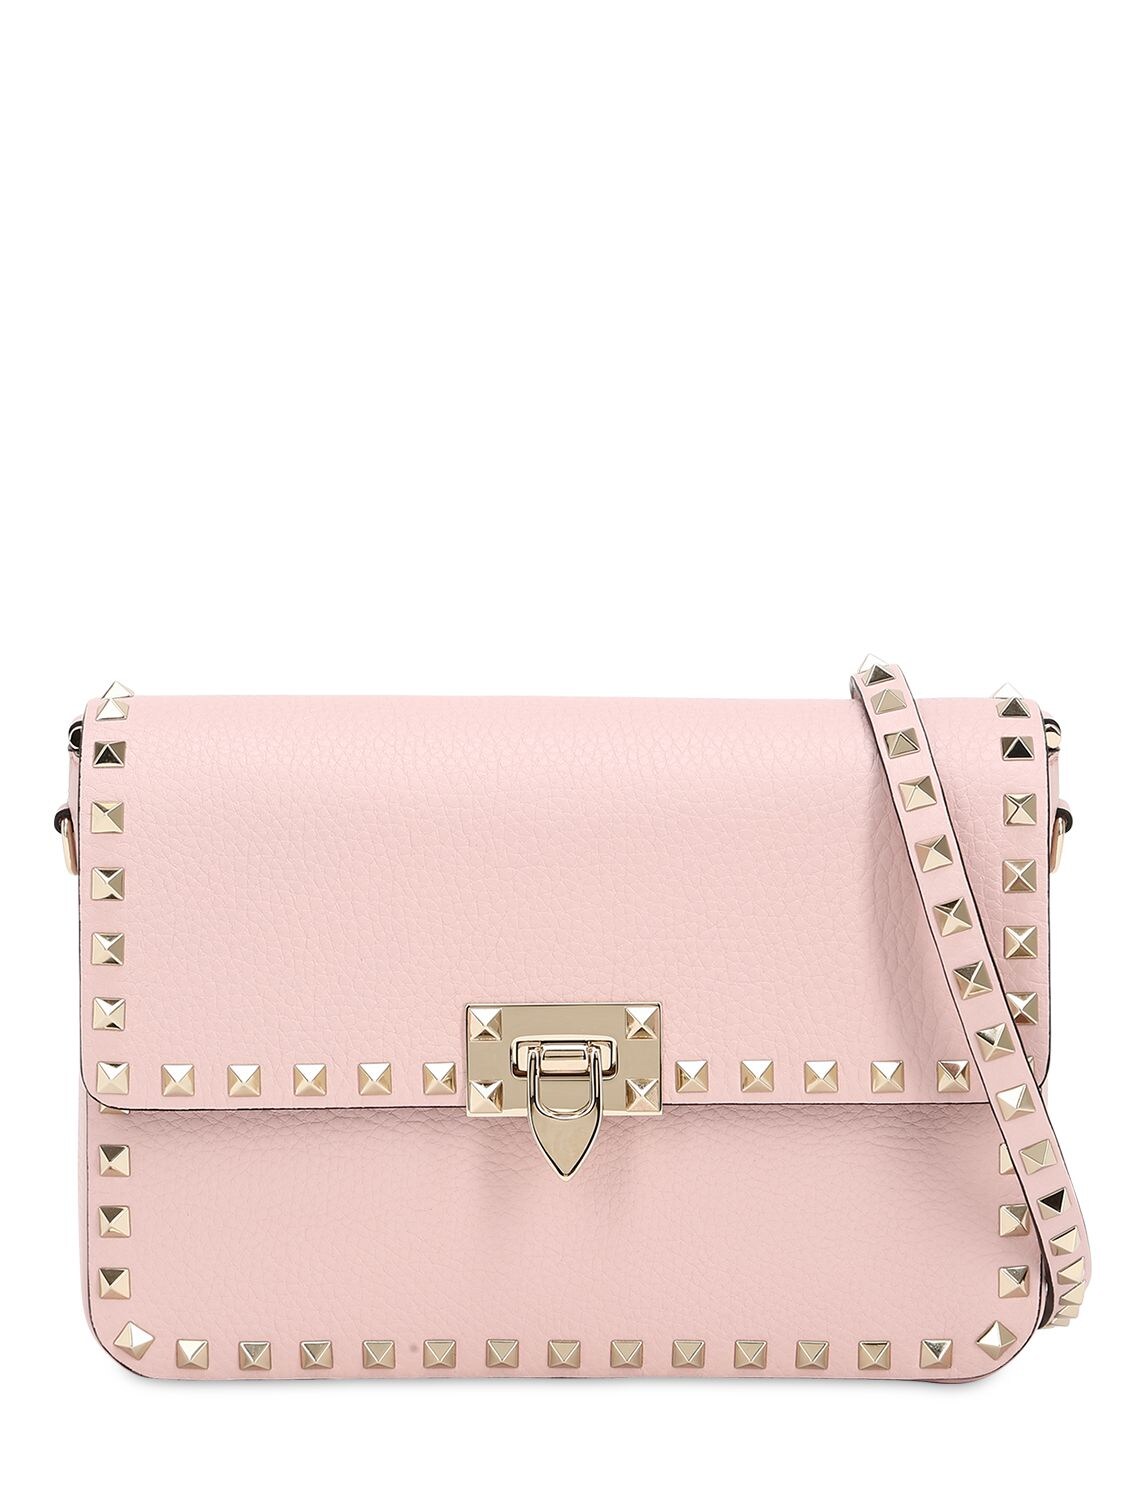 Valentino Garavani Rockstud Leather Bag In Pink